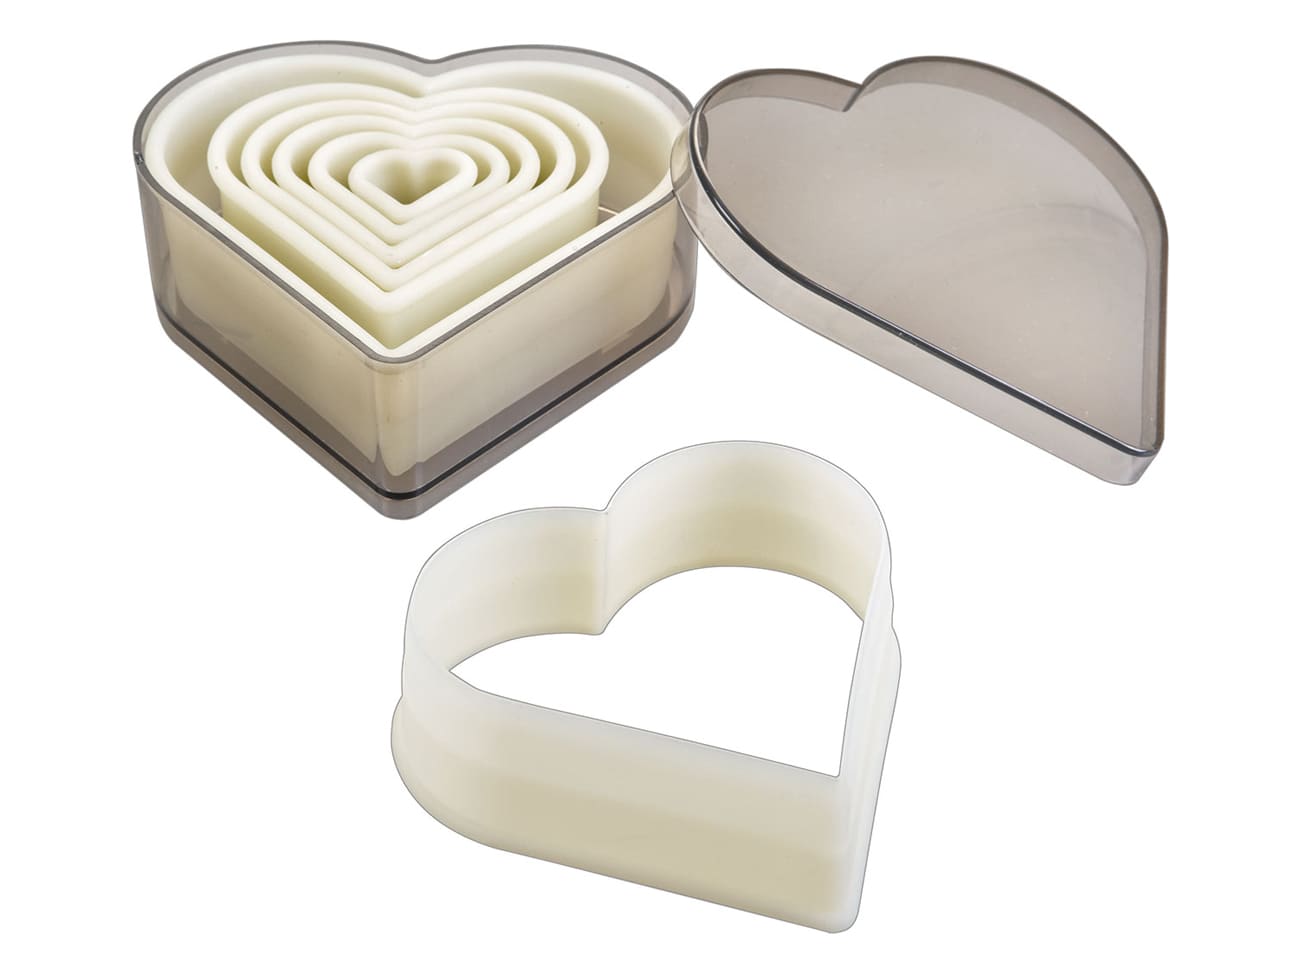 Heart-shaped pasta cutter set - 7 pieces - Martellato